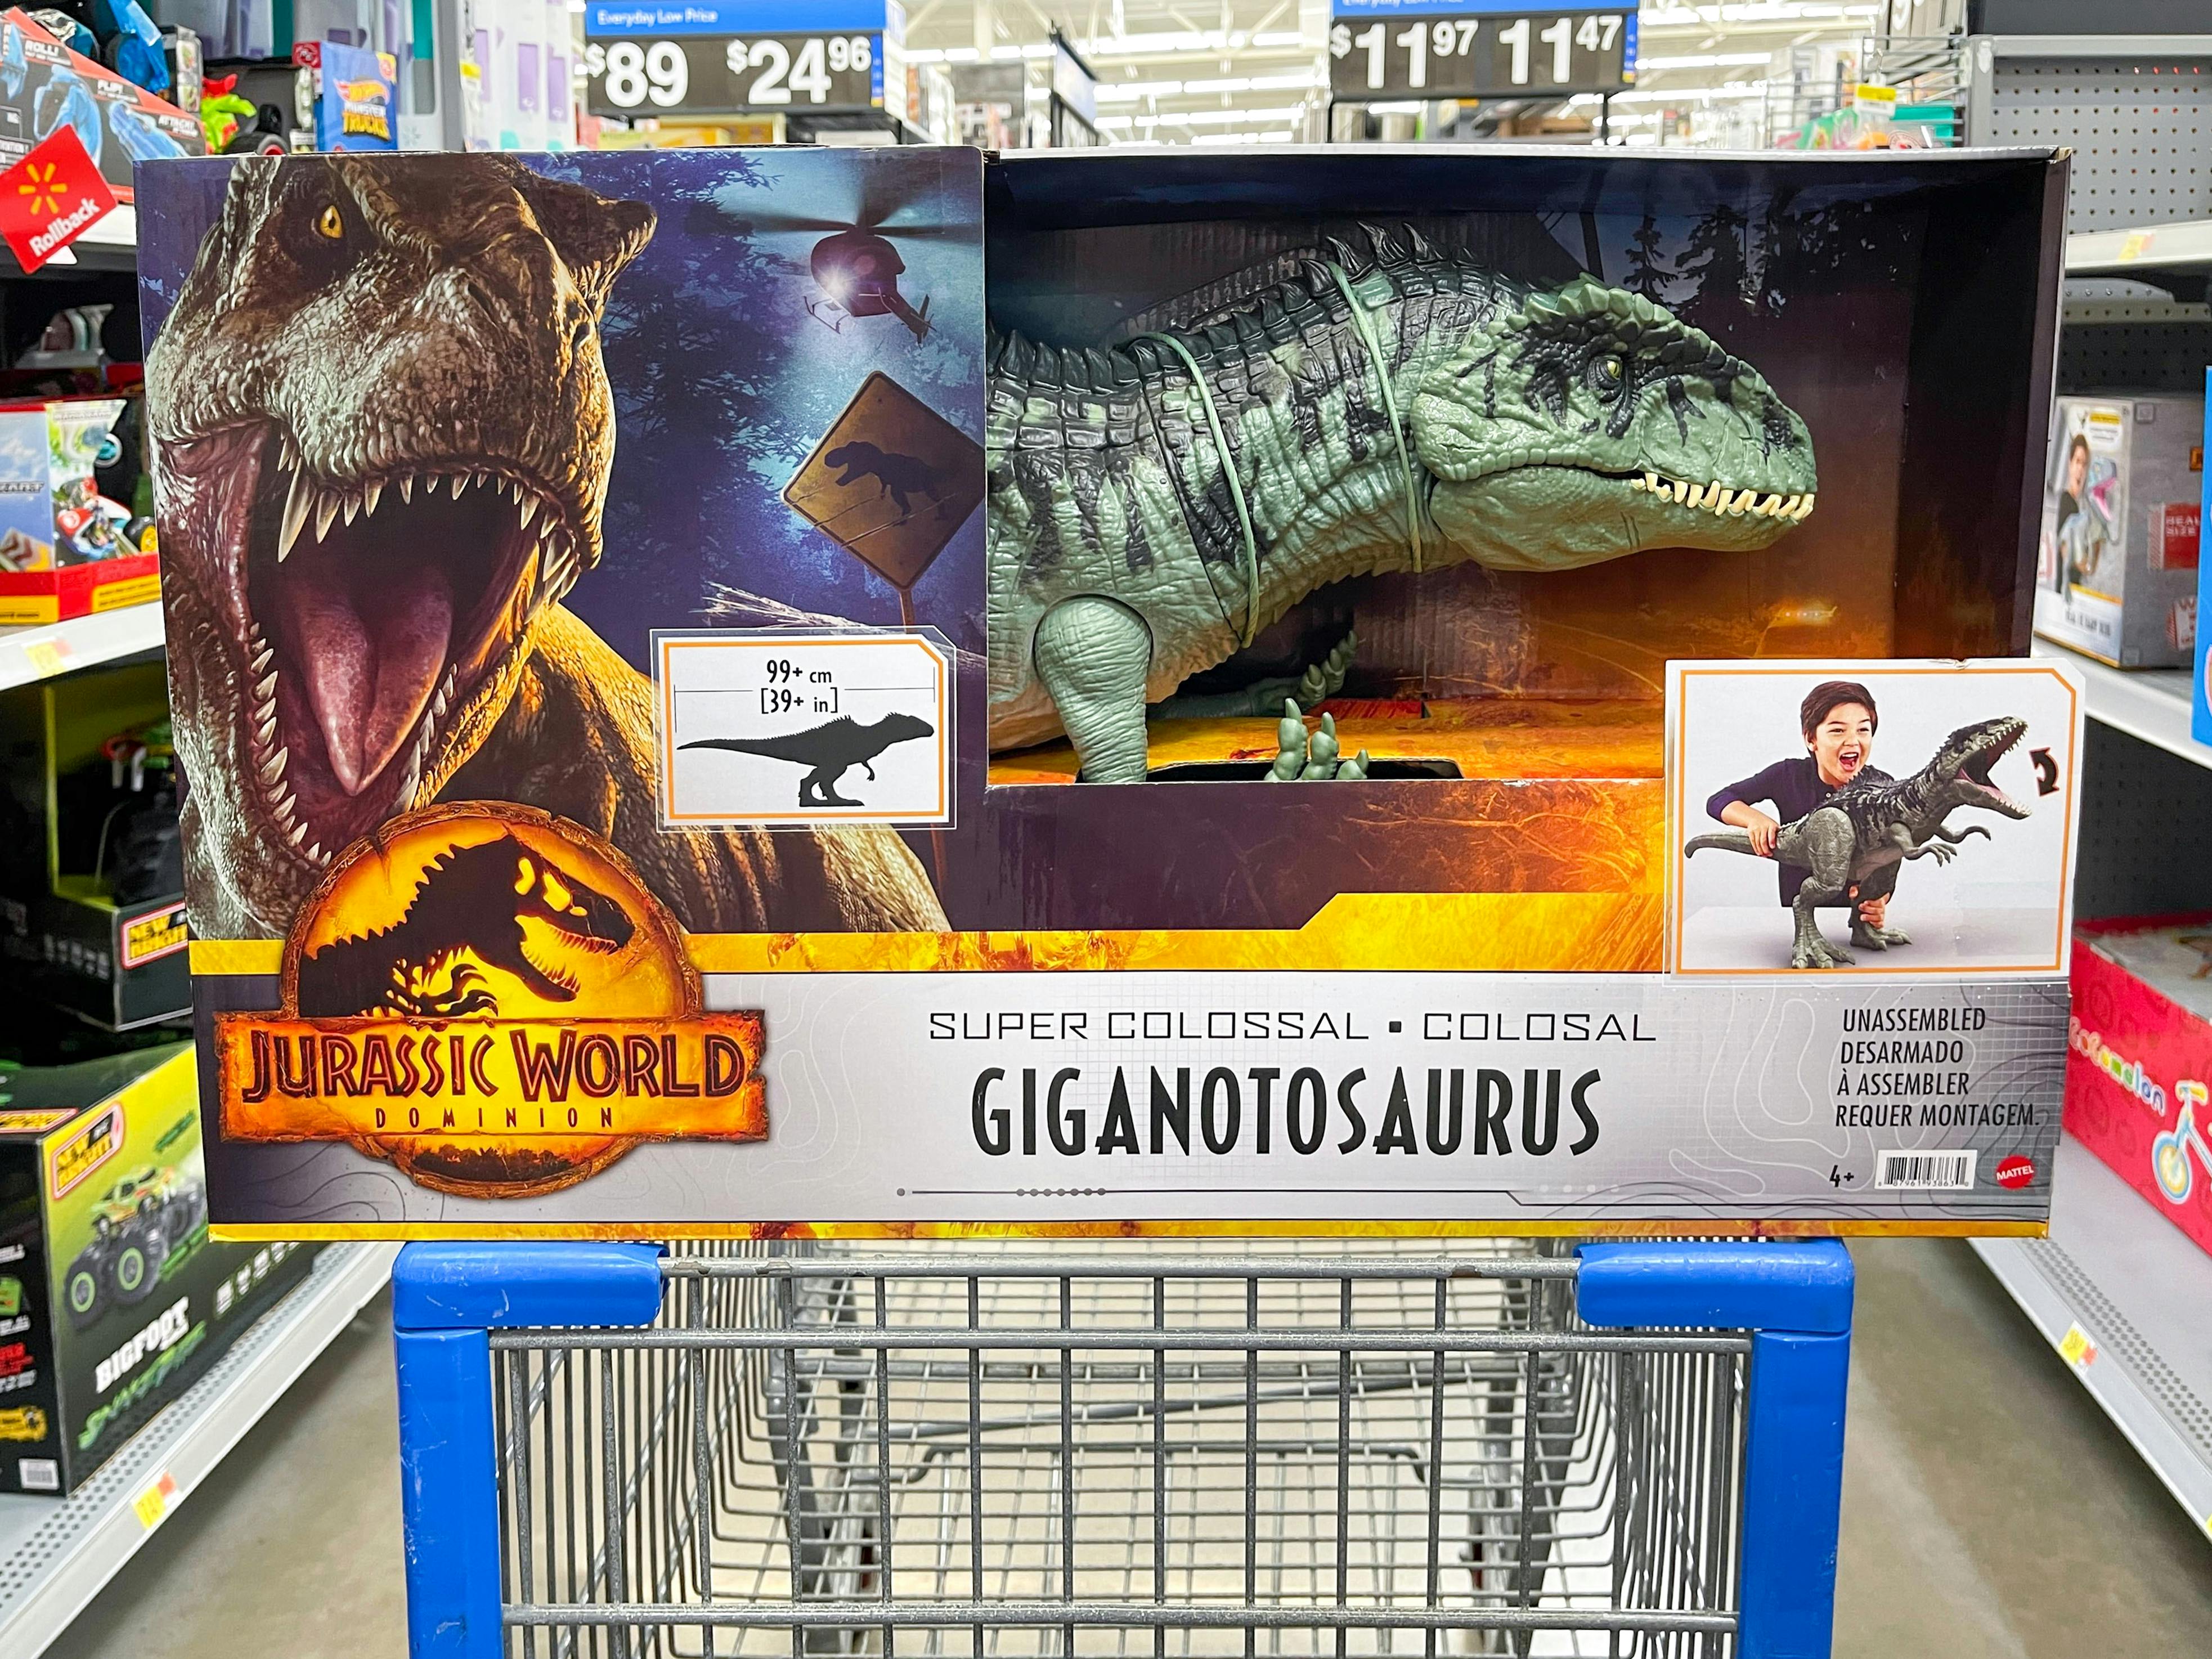 A Jurassic World Dominion Super Colossal Giganotosaurus in a Walmart shopping cart.